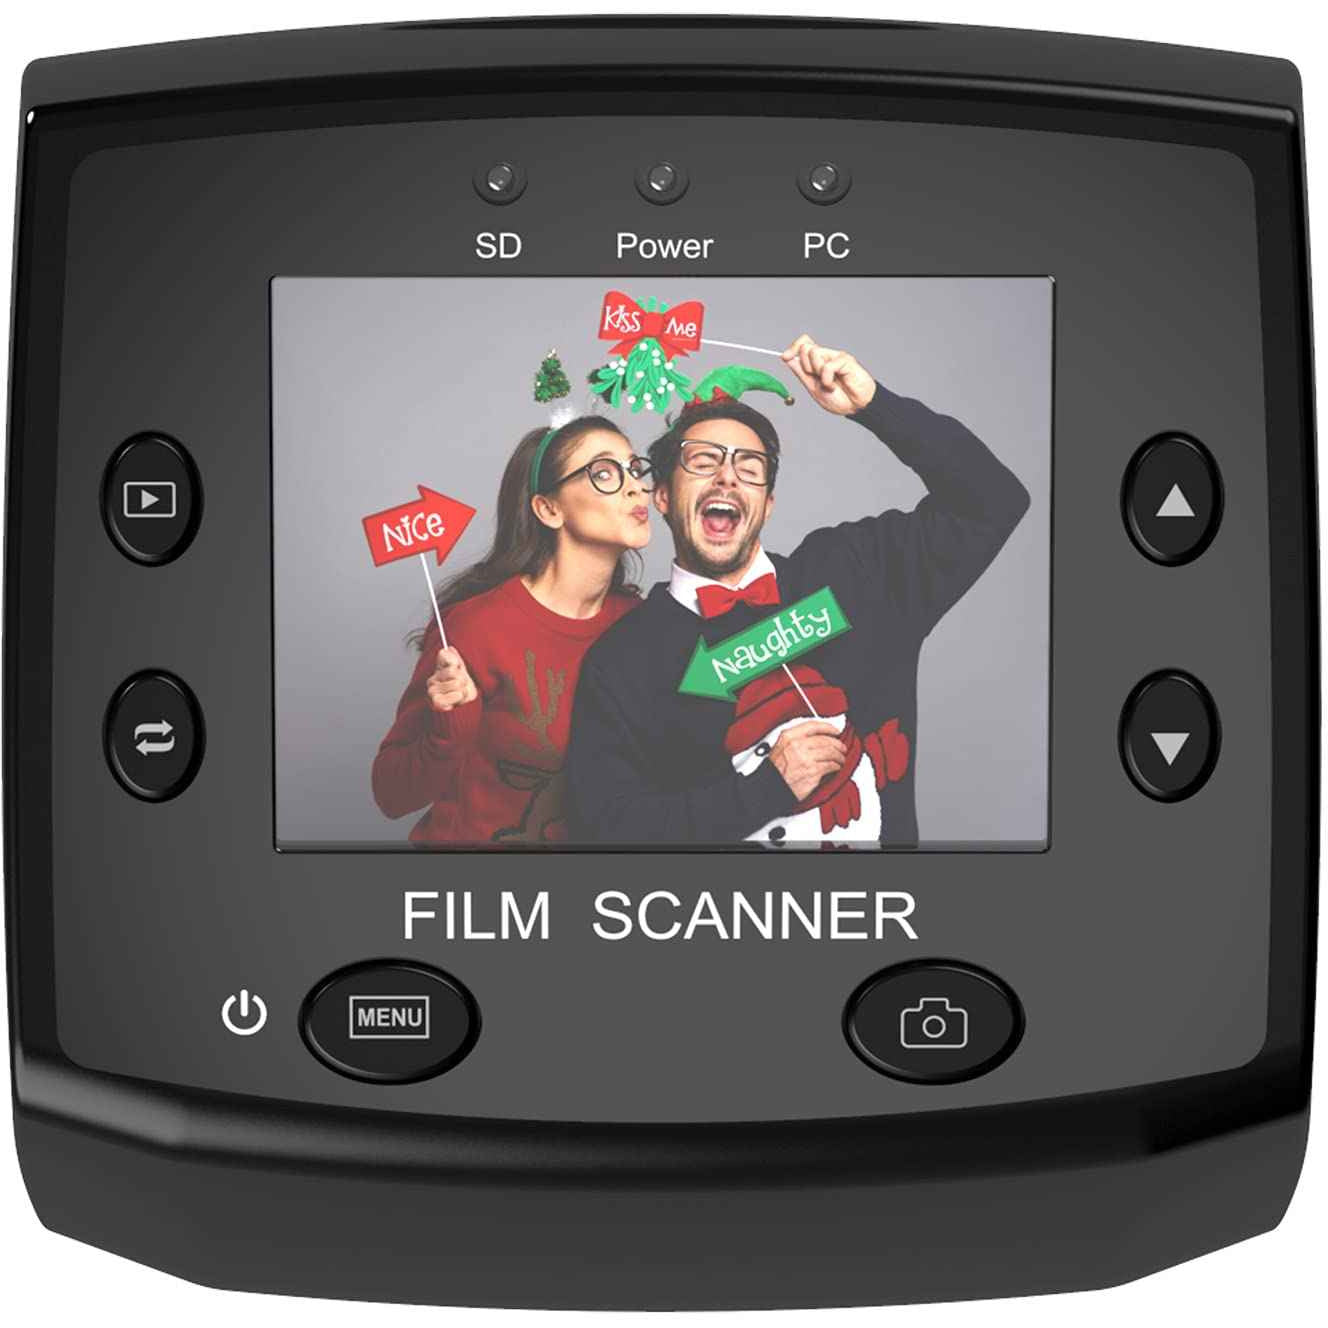 135 Film Negative Scanner Convert 35mm Film